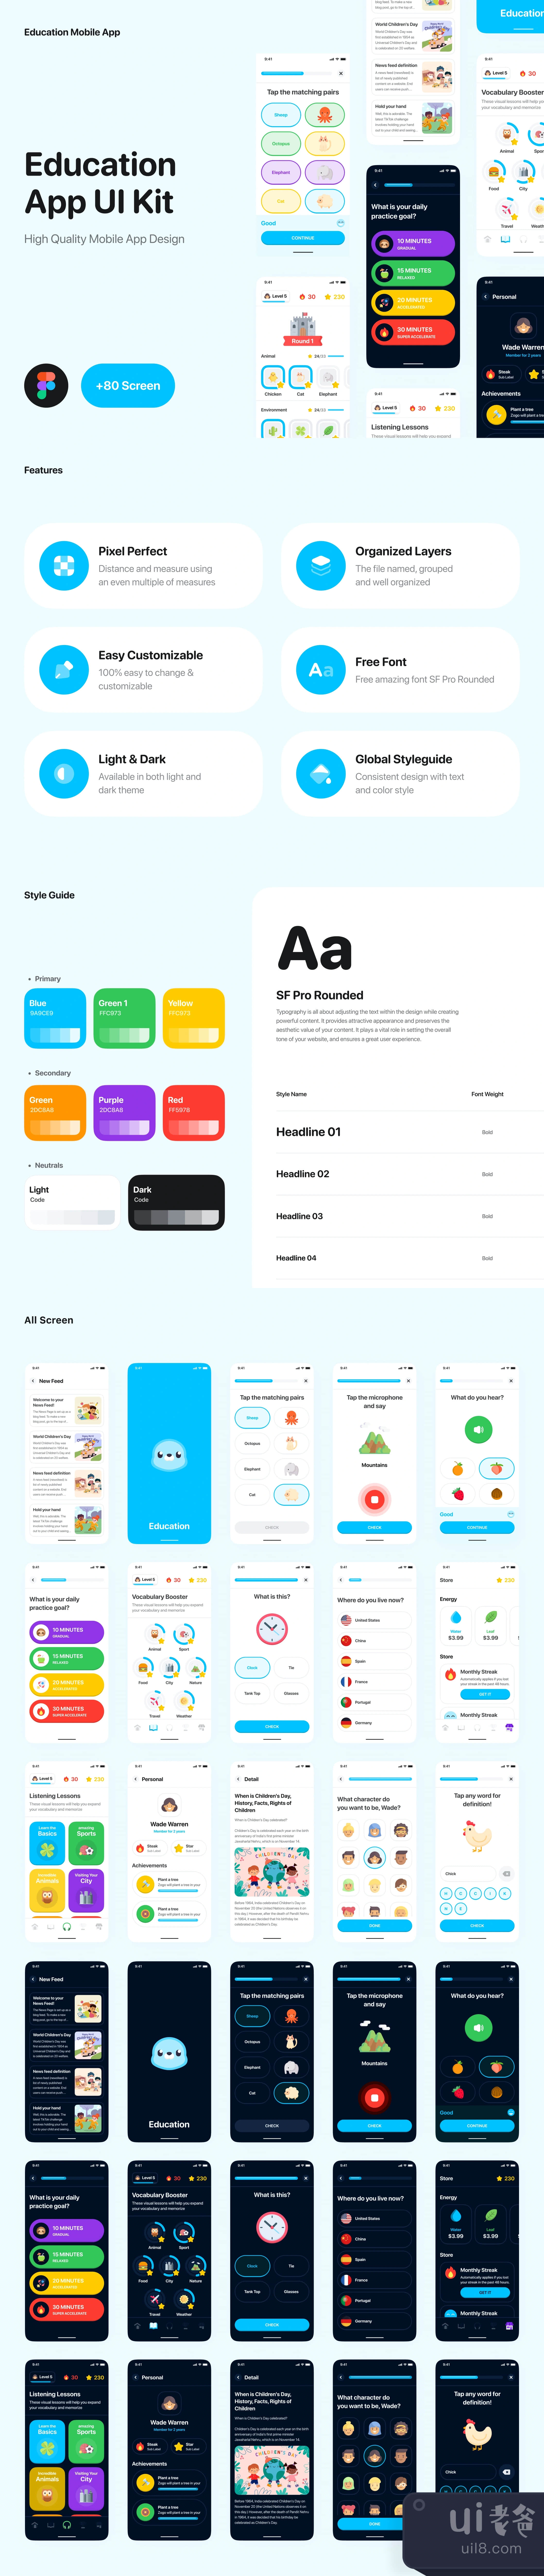 教育类APP UI Kit (Education App UI Kit)插图